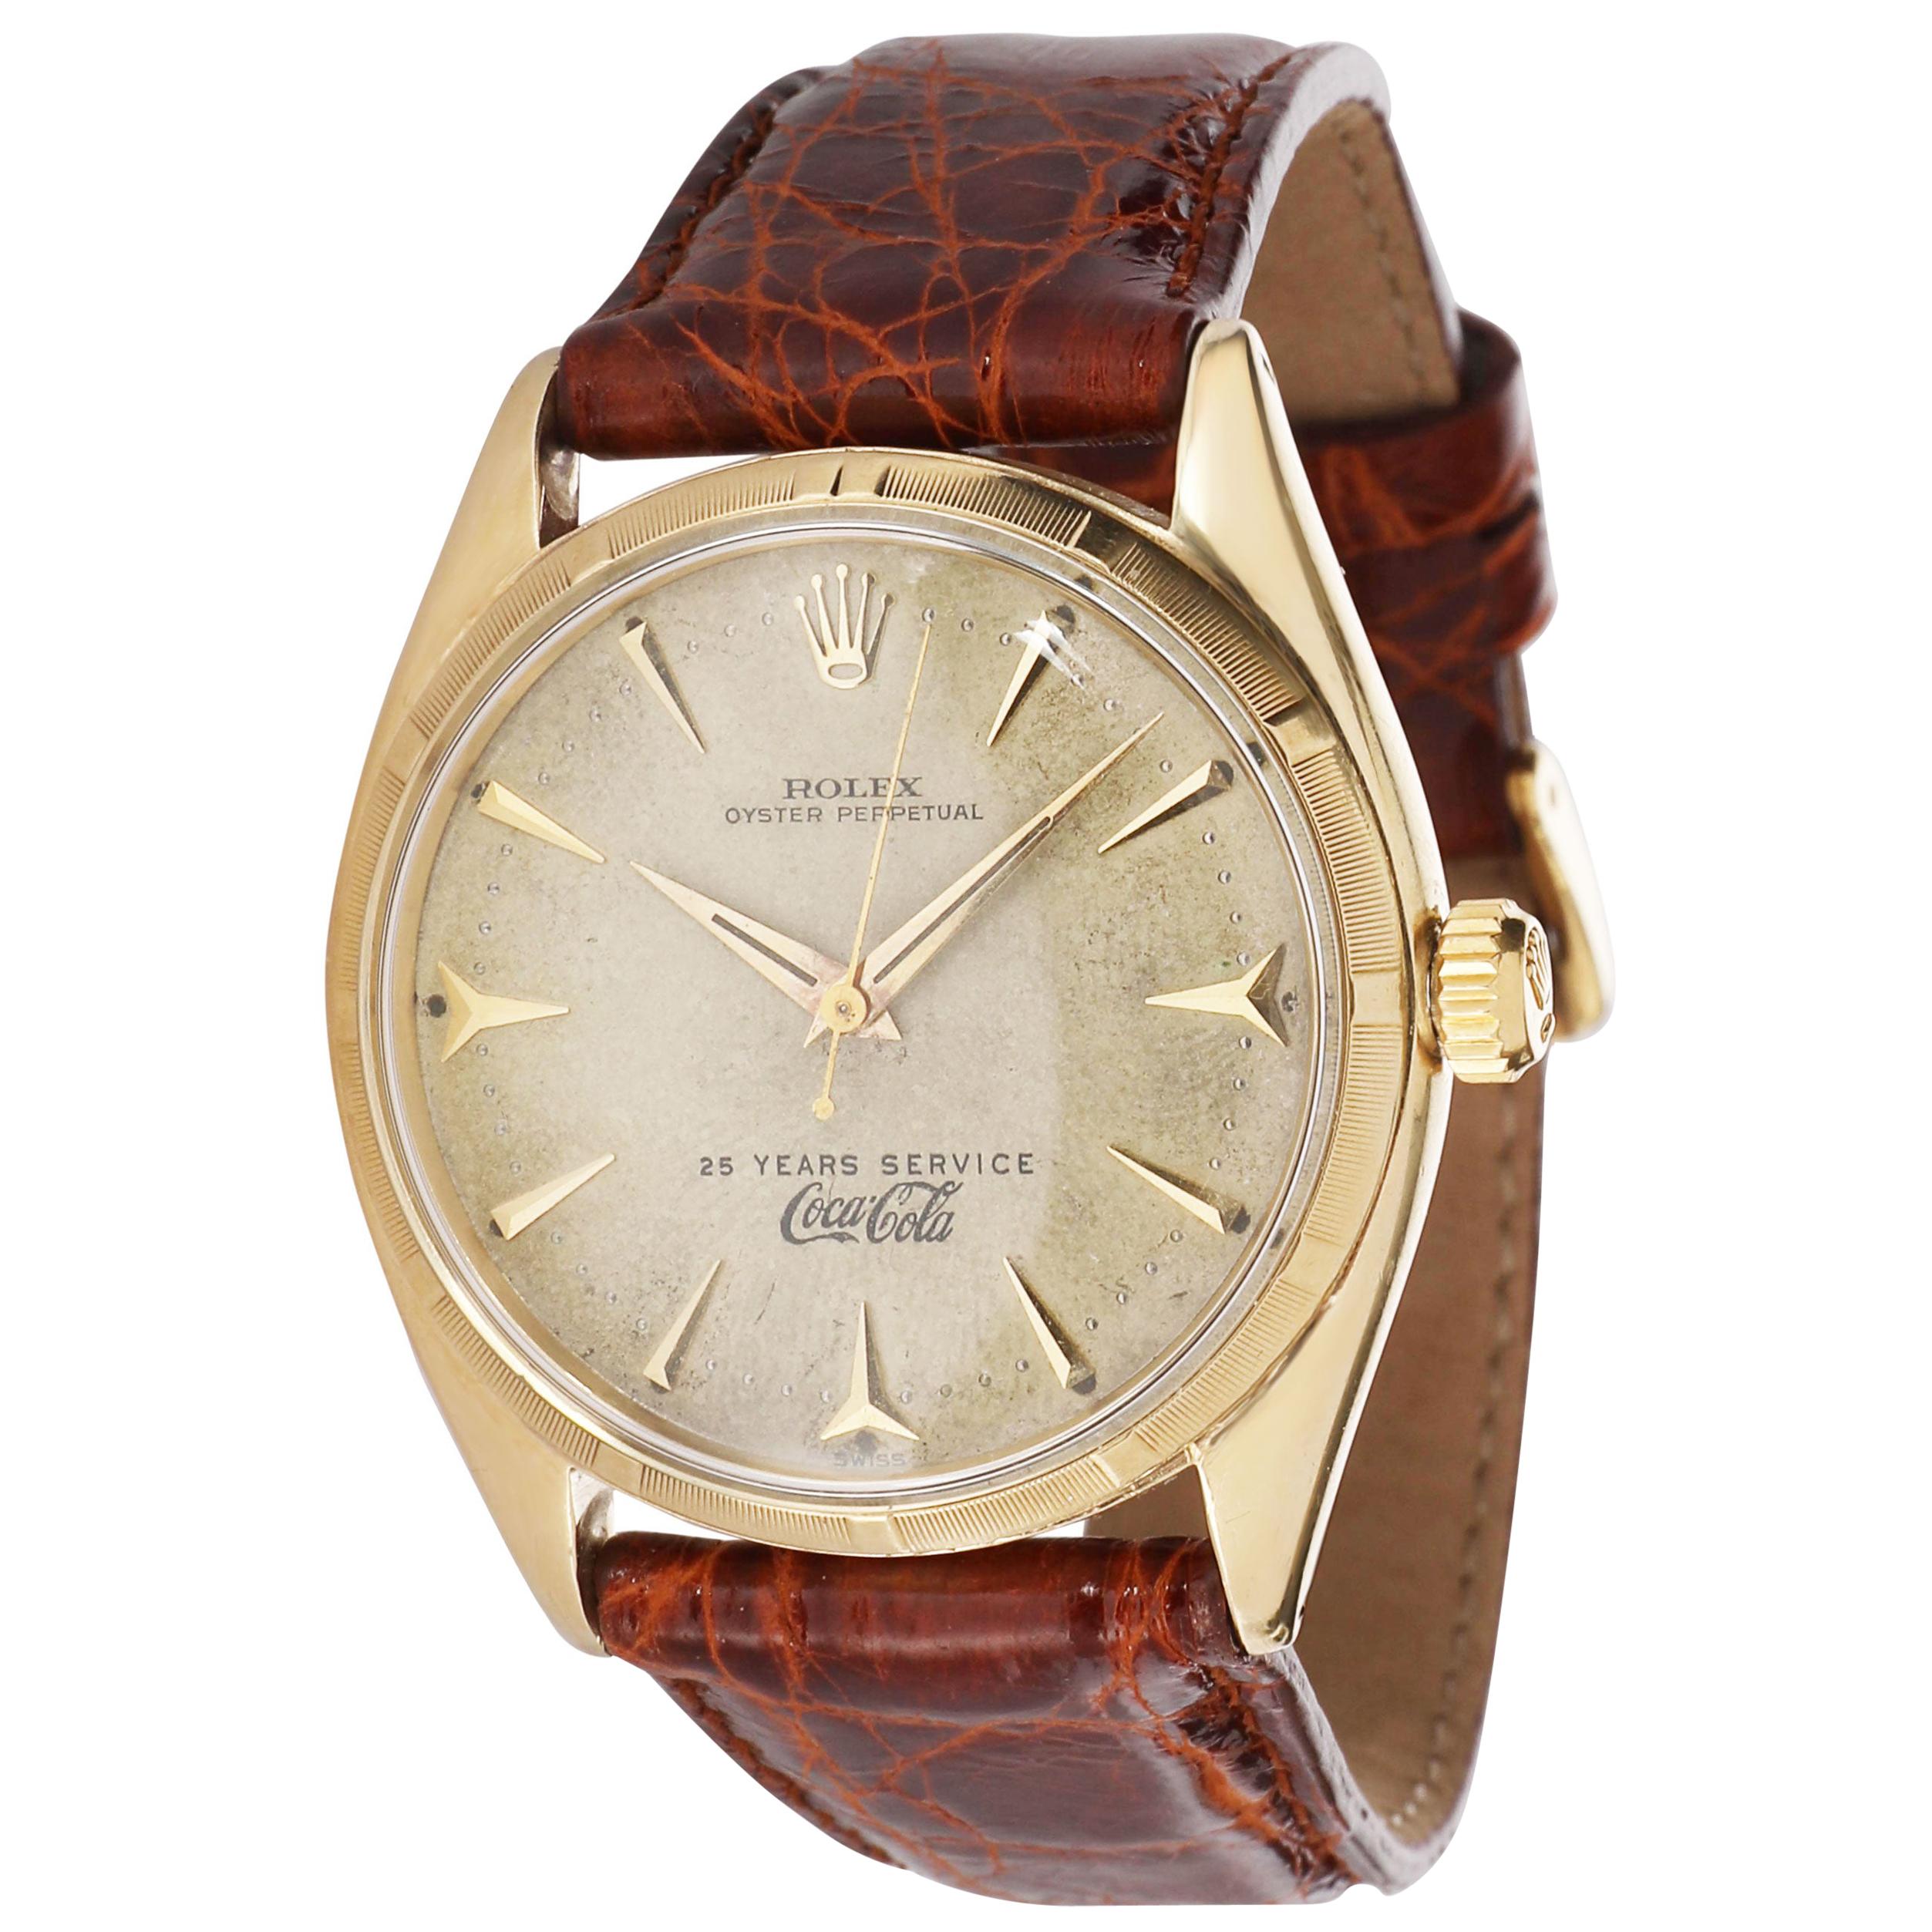 Rolex Oyster Perpetual 6565 Men's Watch in 14 Karat Yellow Gold